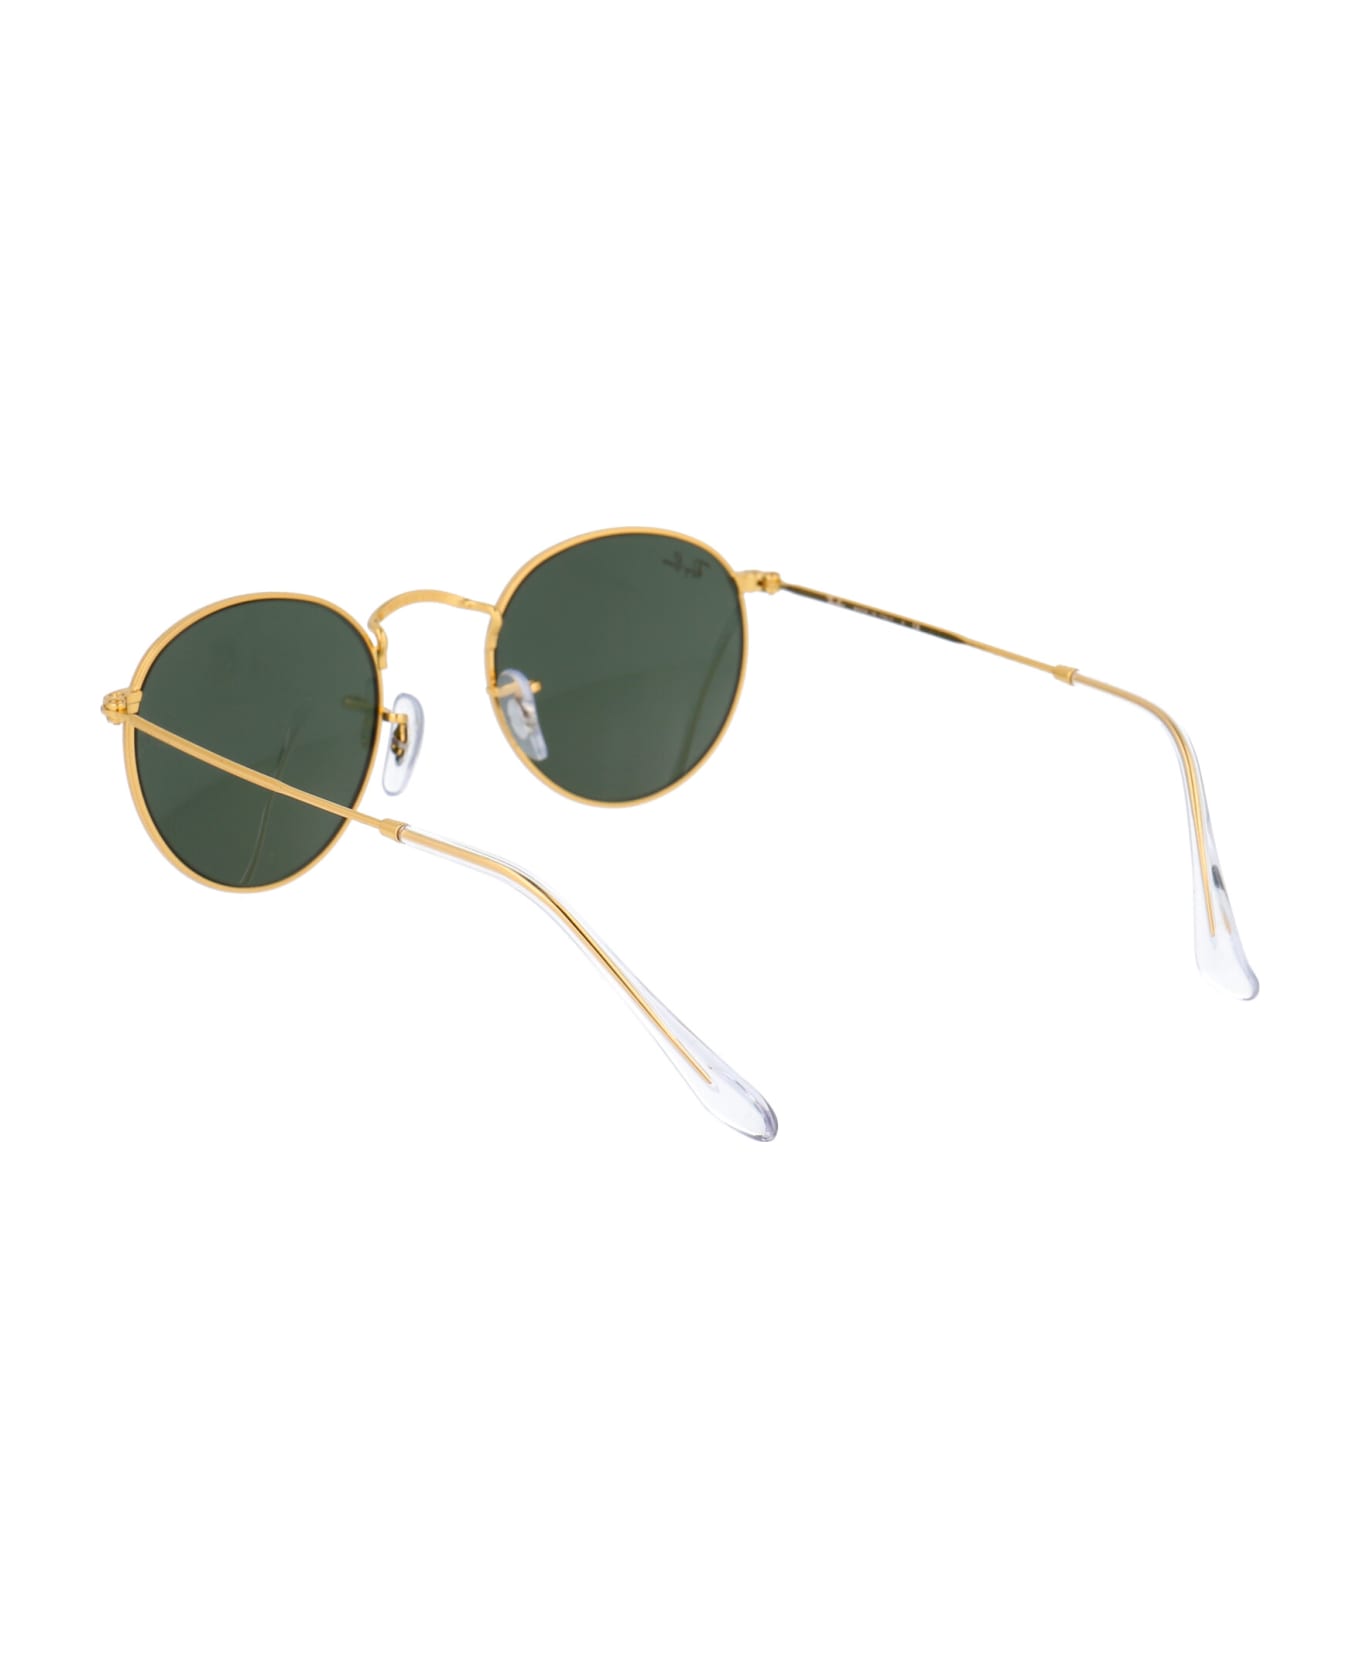 Ray-Ban Round Metal Sunglasses - 919631 GOLD